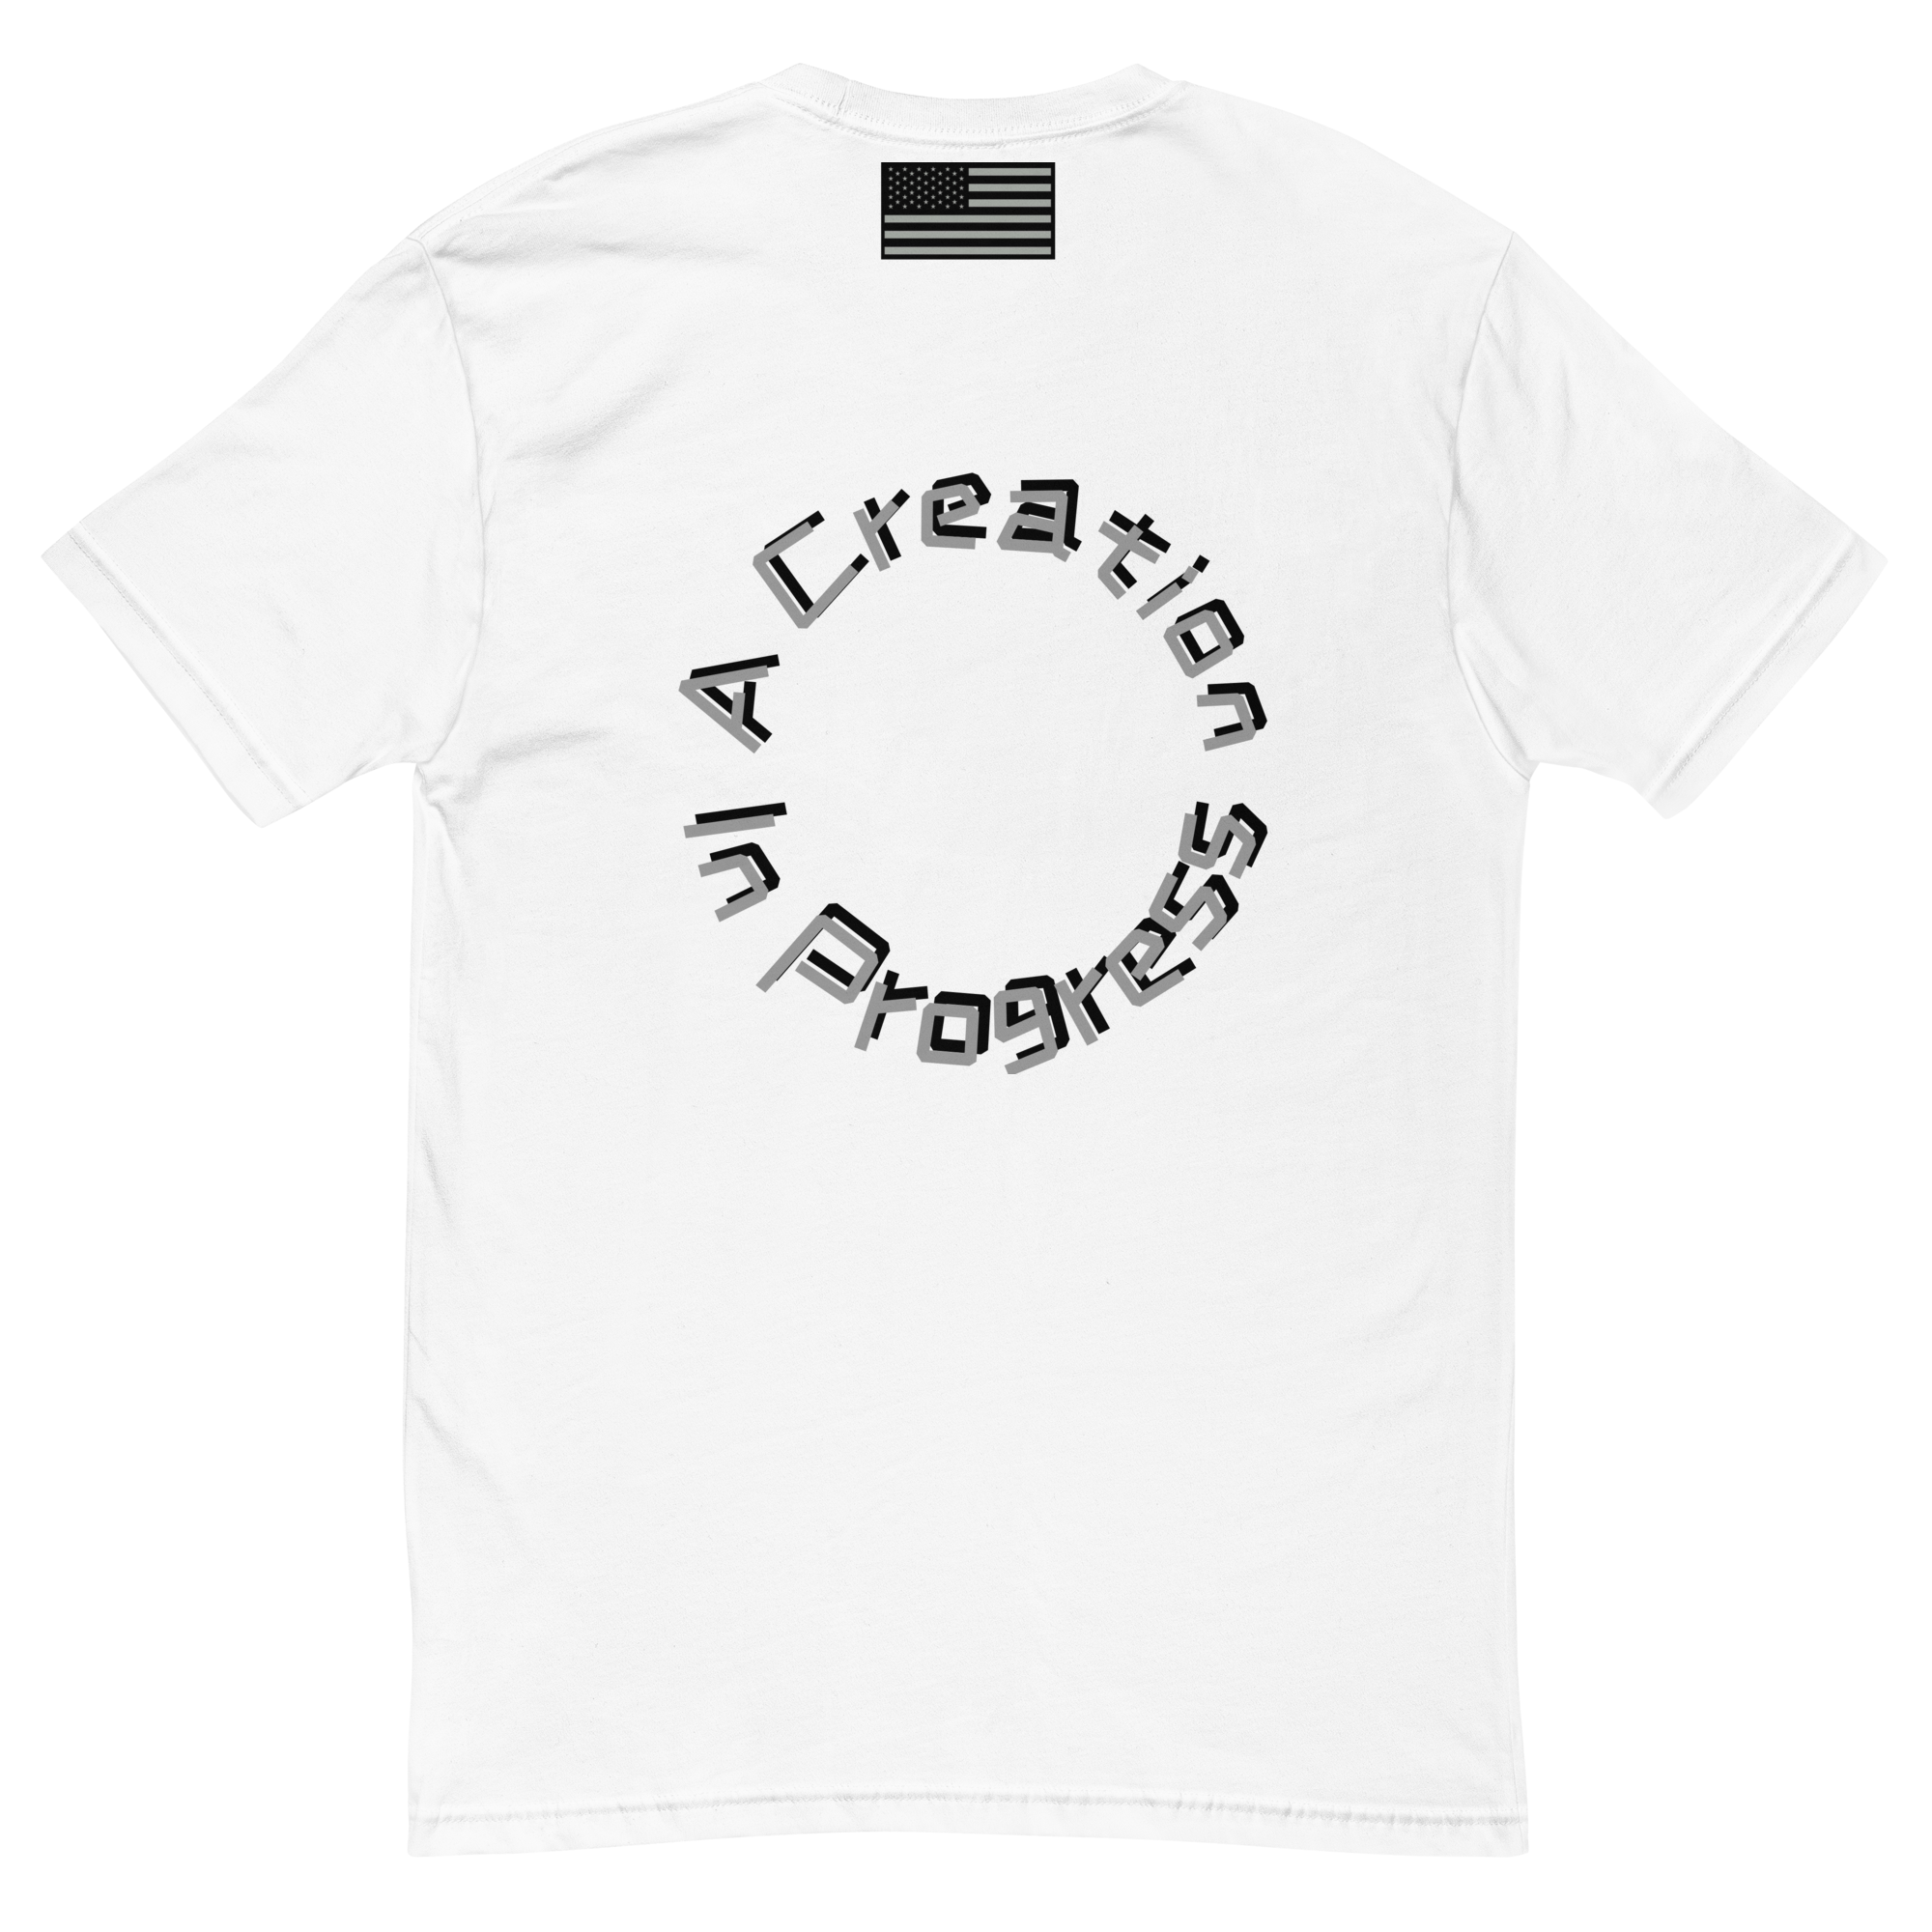 A Creation in Progress T-shirt